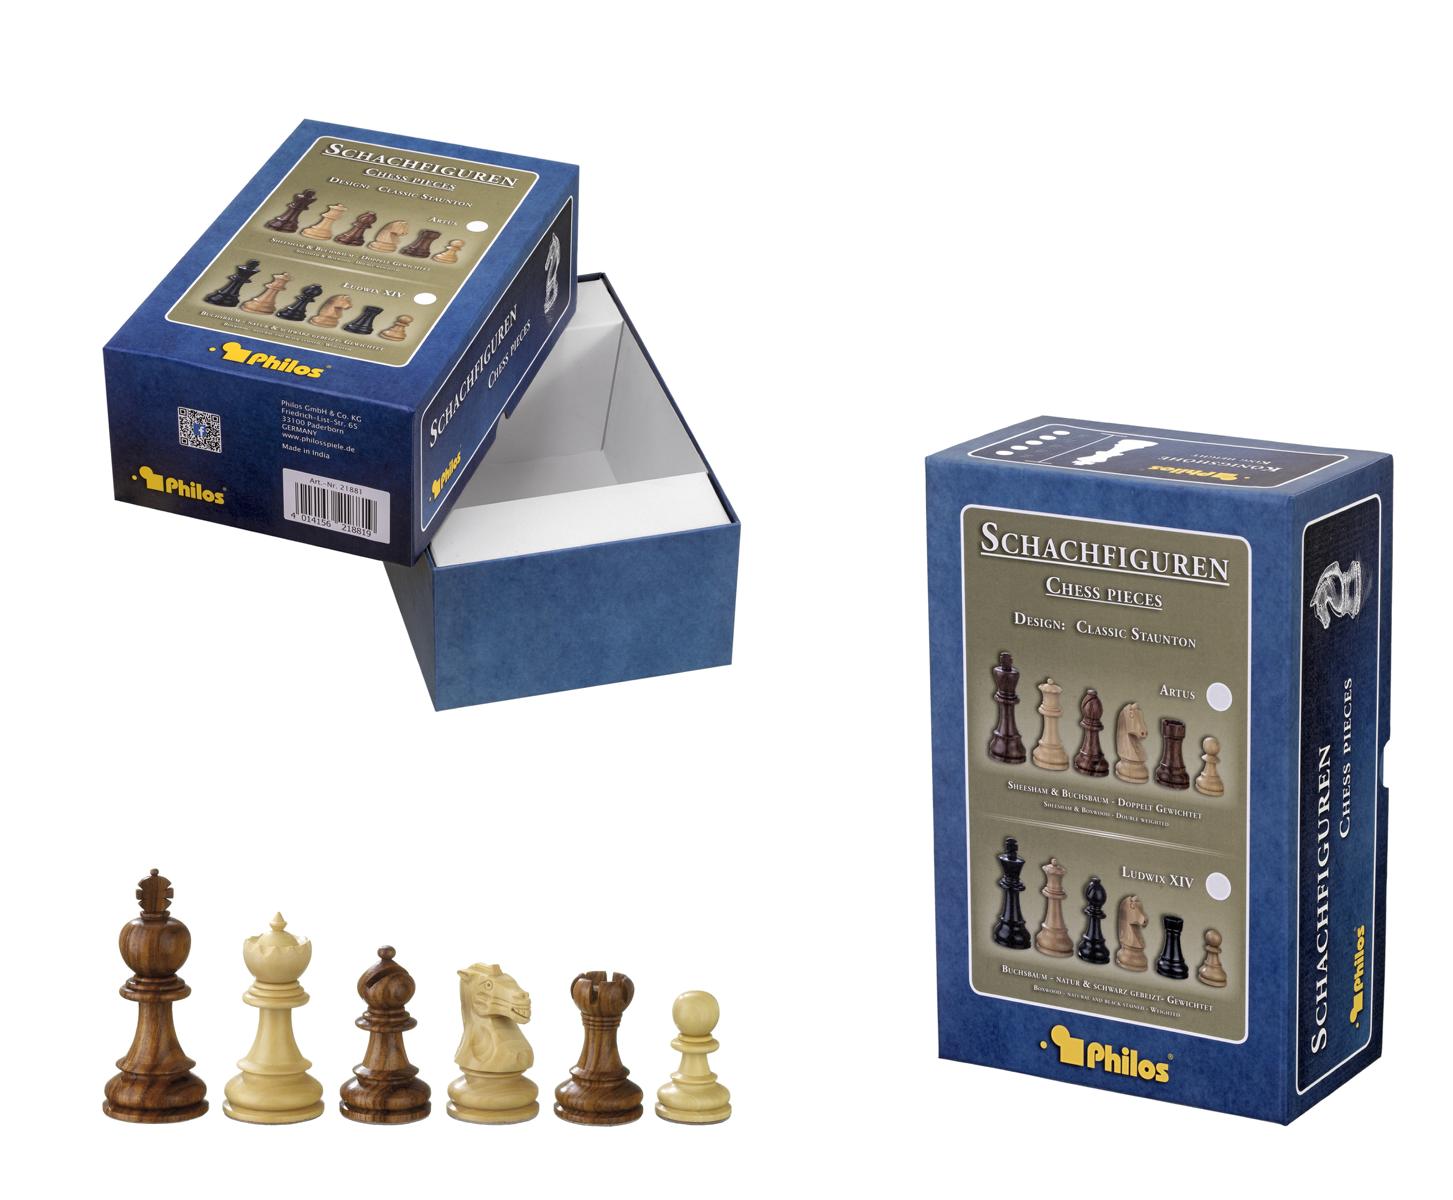 Schachfiguren Valerian, Königshöhe 90 mm, in Set-Up Box